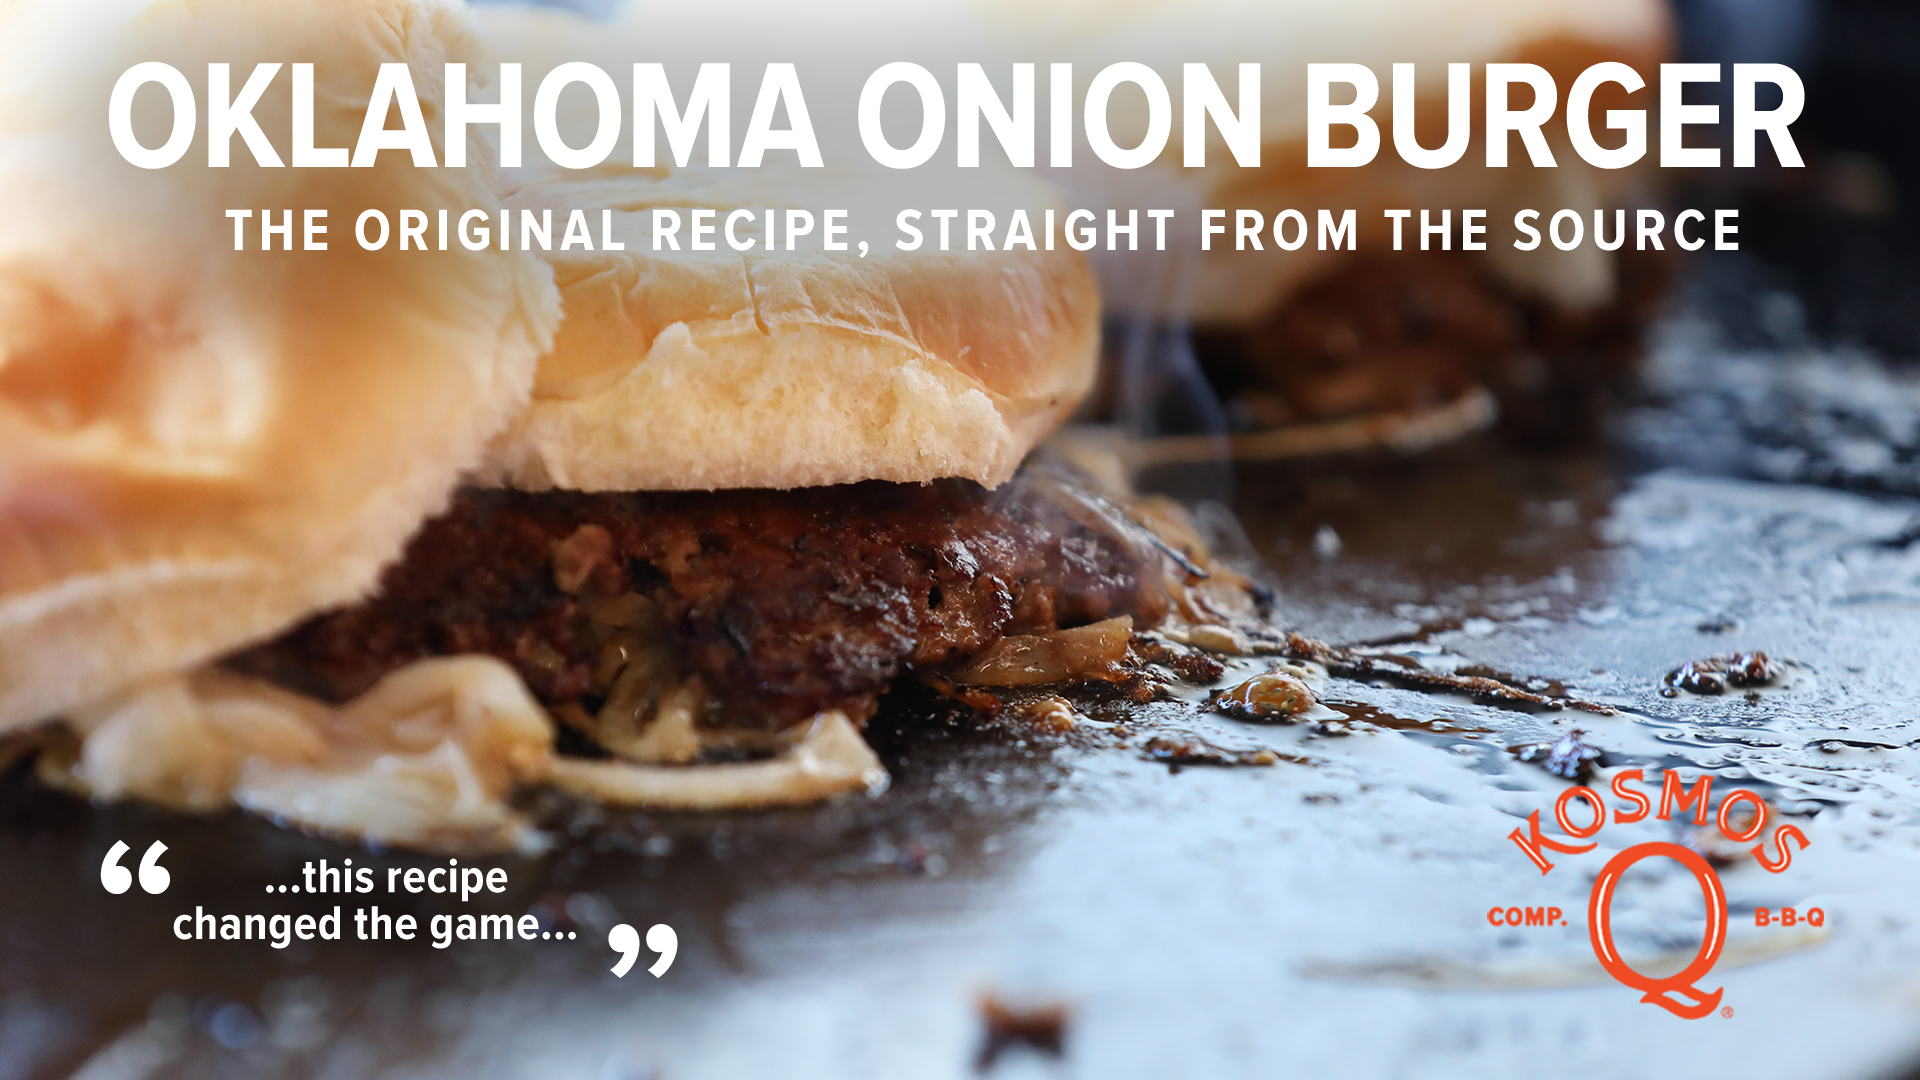 The Real Oklahoma Onion Burger